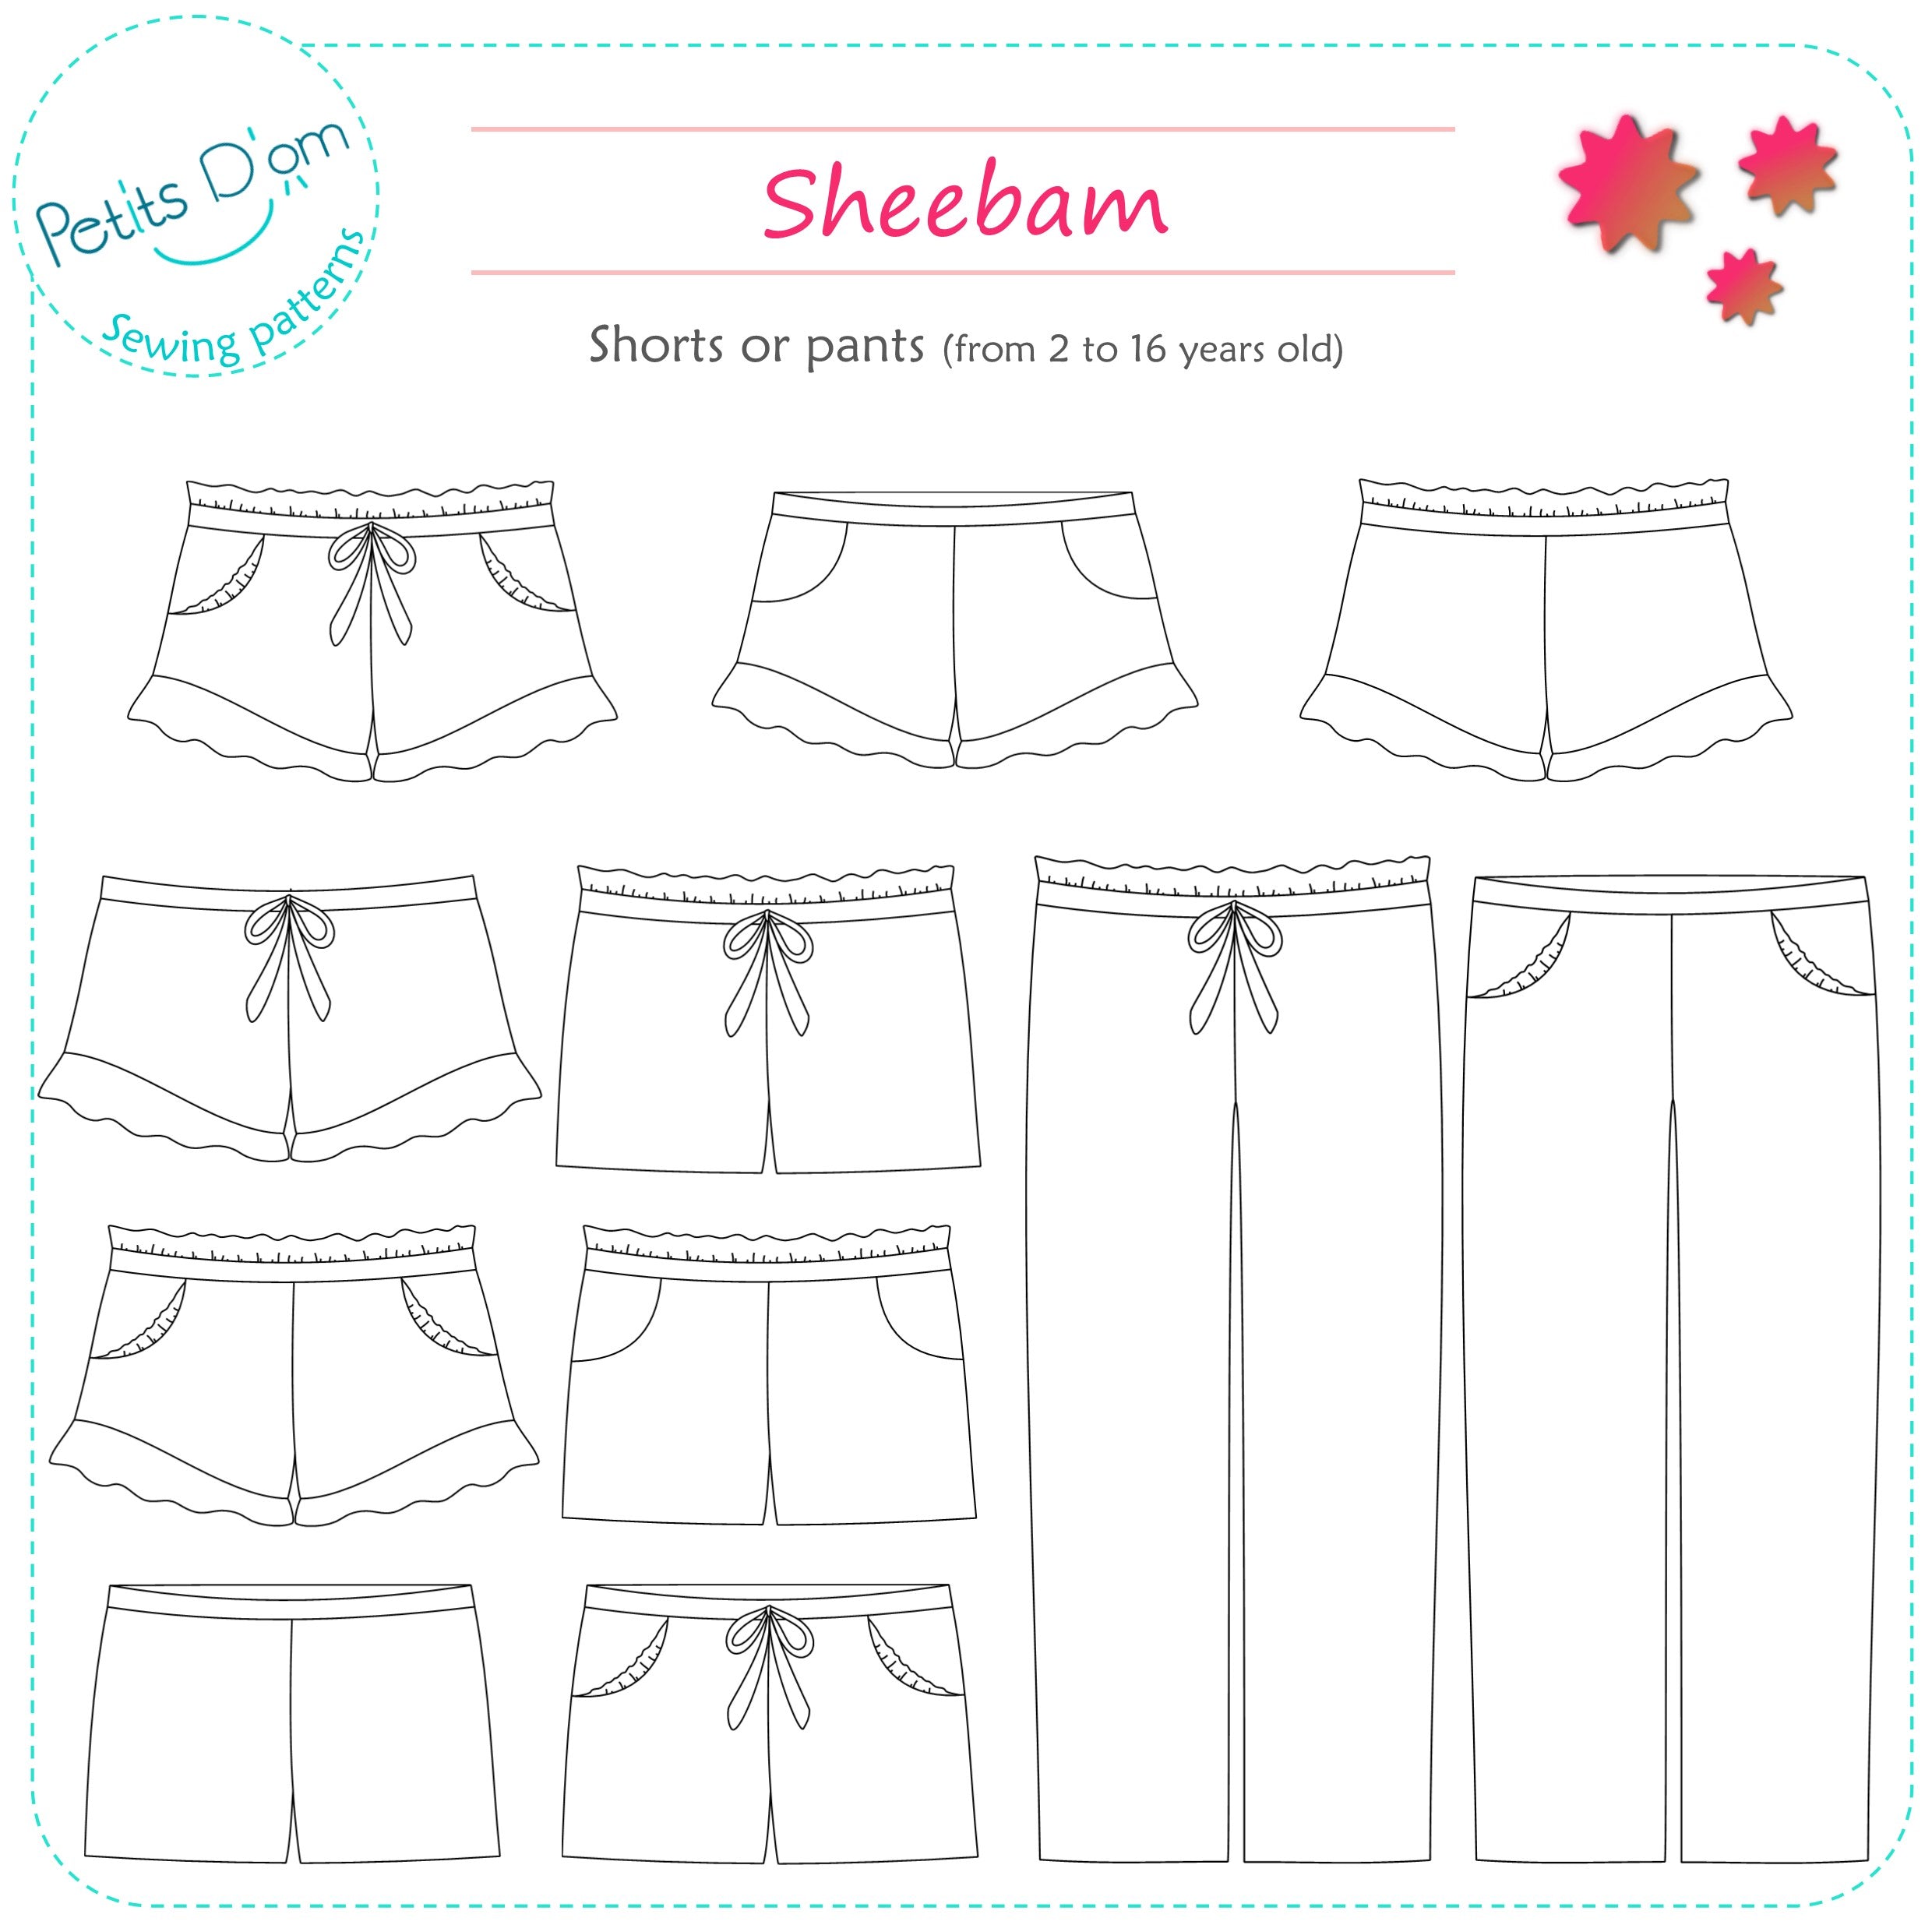 Petits D’om Child Sheebam Shorts or Pants